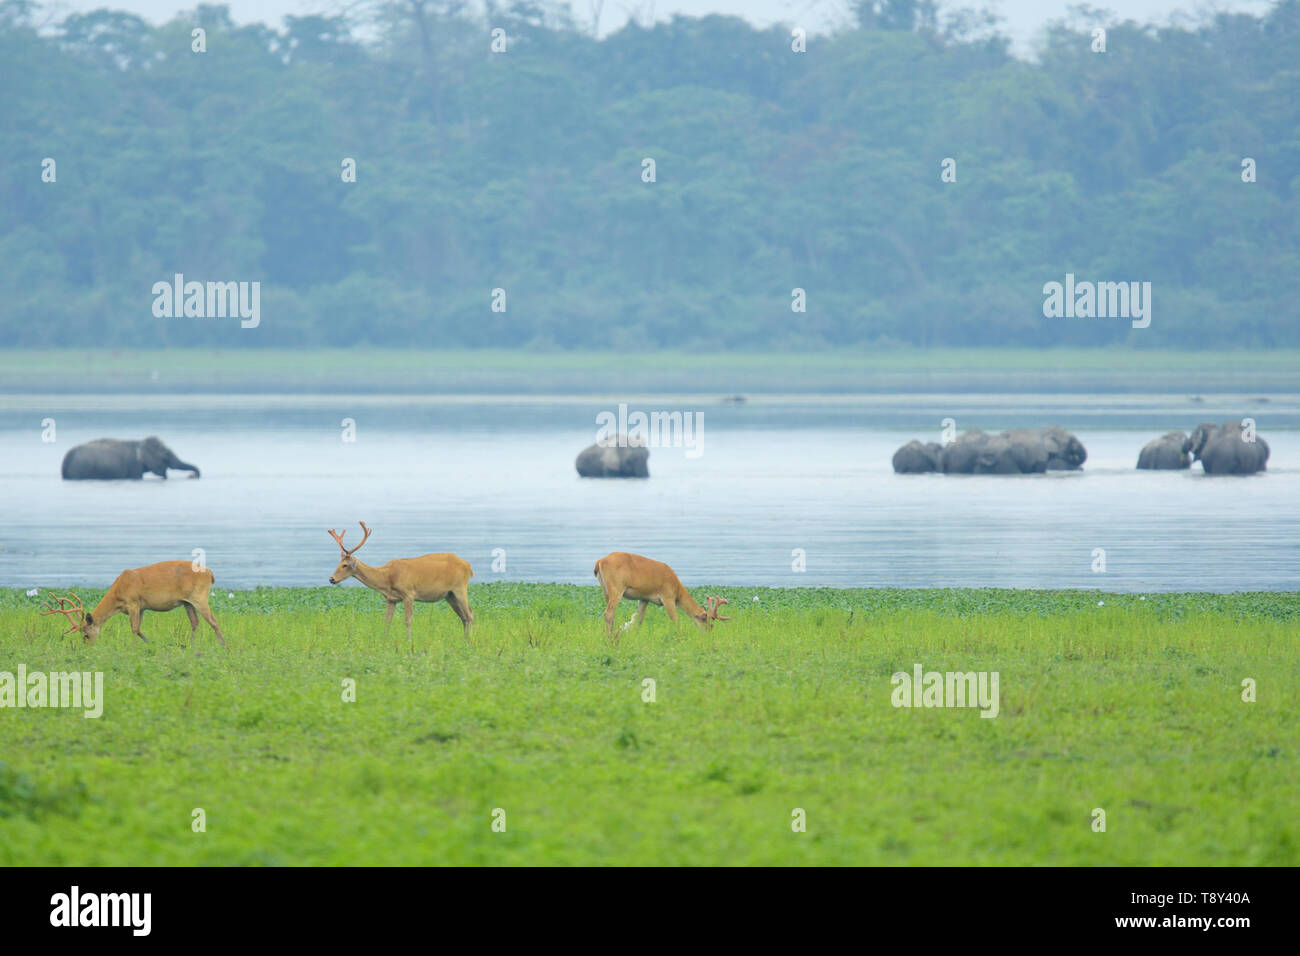 Endangered Swamp Deer (Rucervus duvaucelii) and Asian Elephants (Elephas maximus)  in Kaziranga National Park, India. Stock Photo